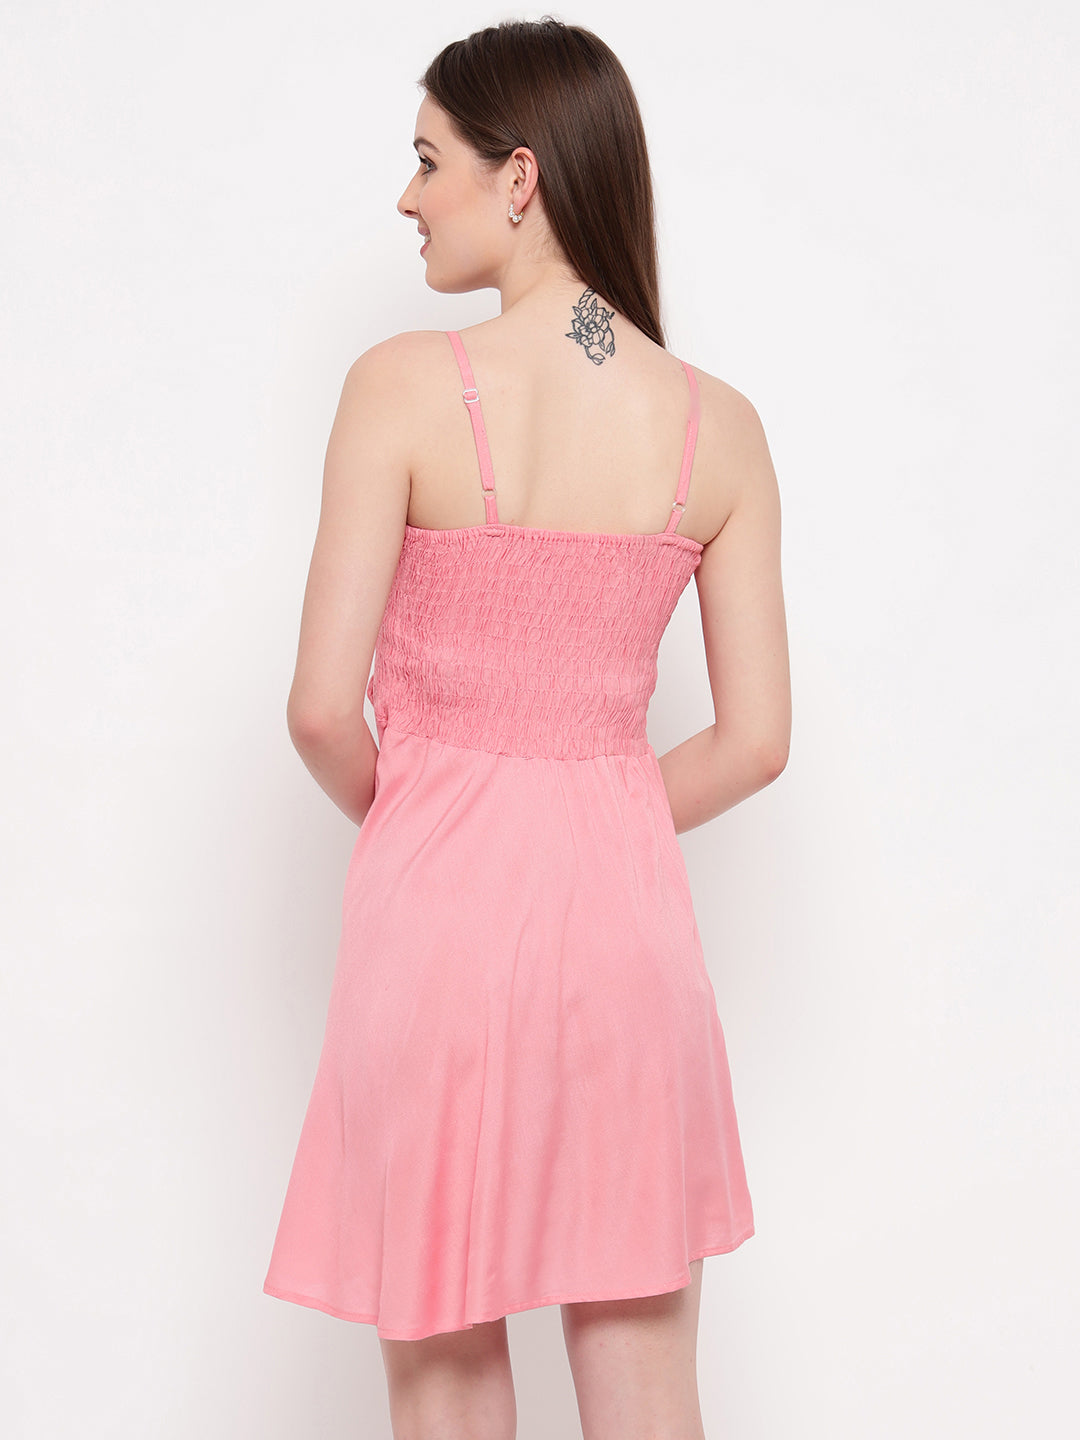 Aawari Short Baby Pink Dress